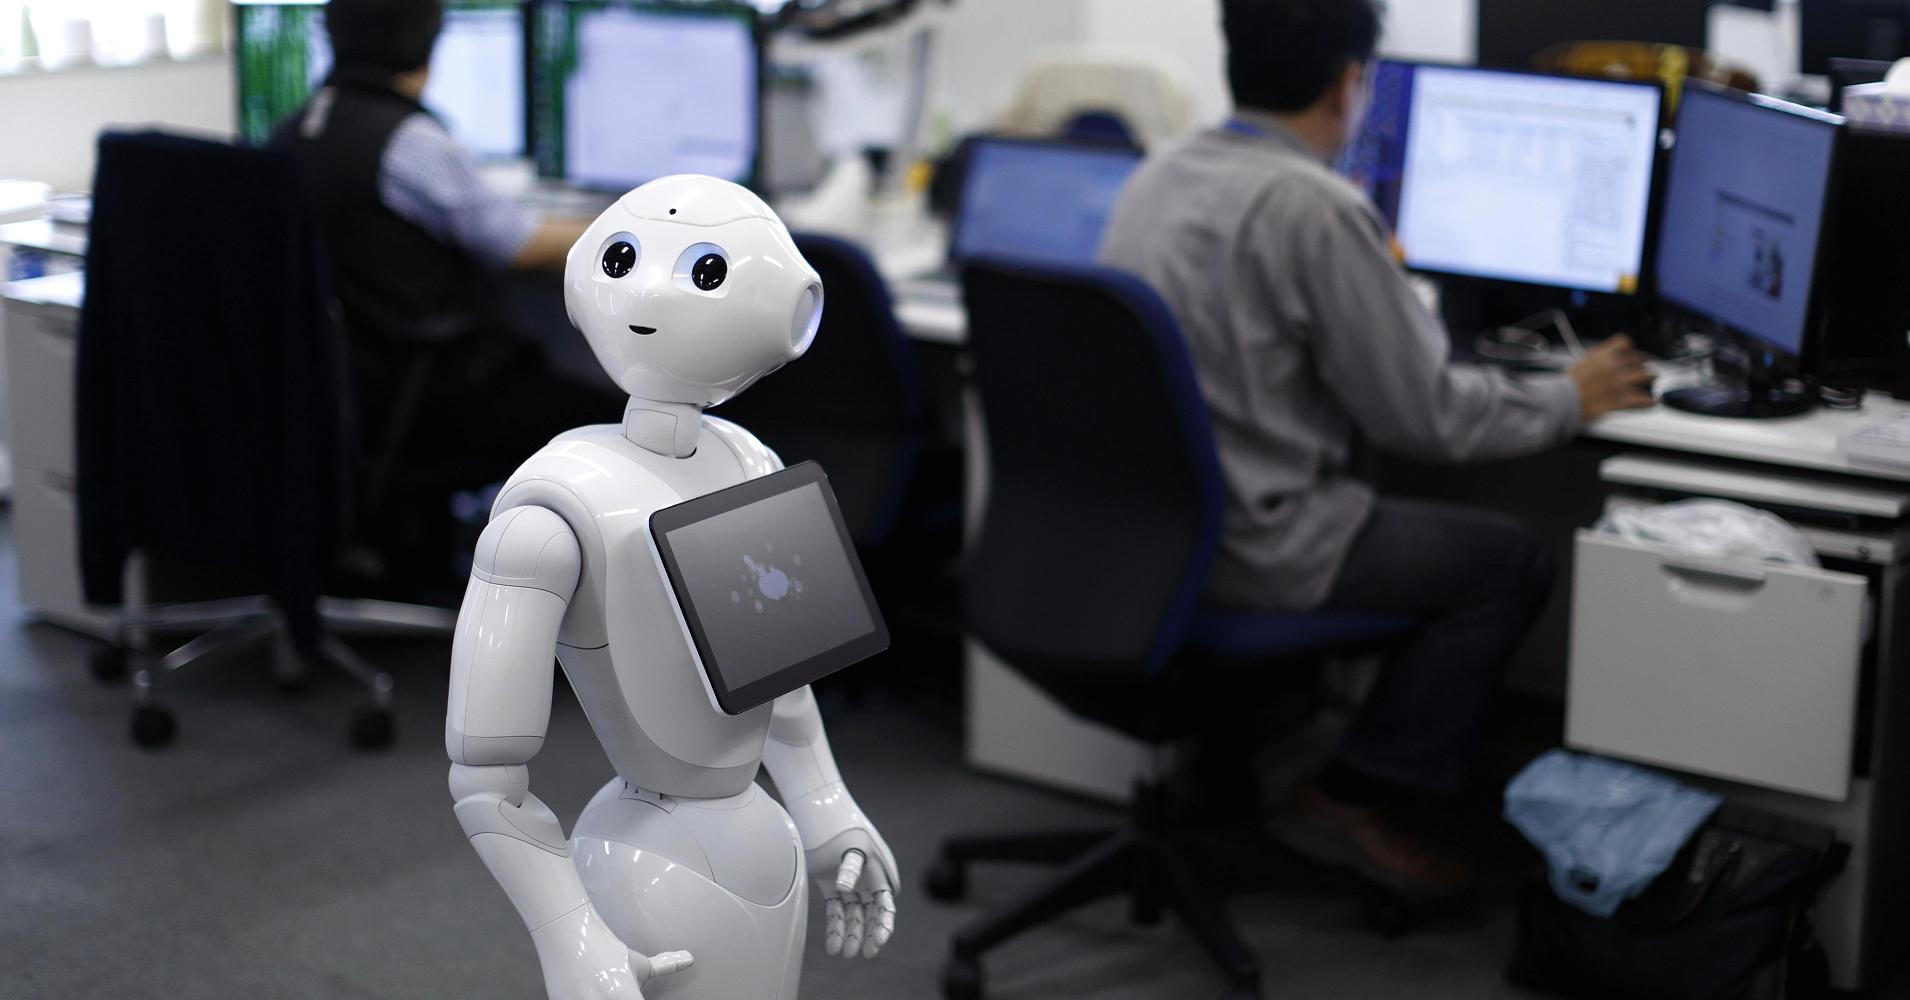 'Job-killing' robots, AI under scrutiny in Davos